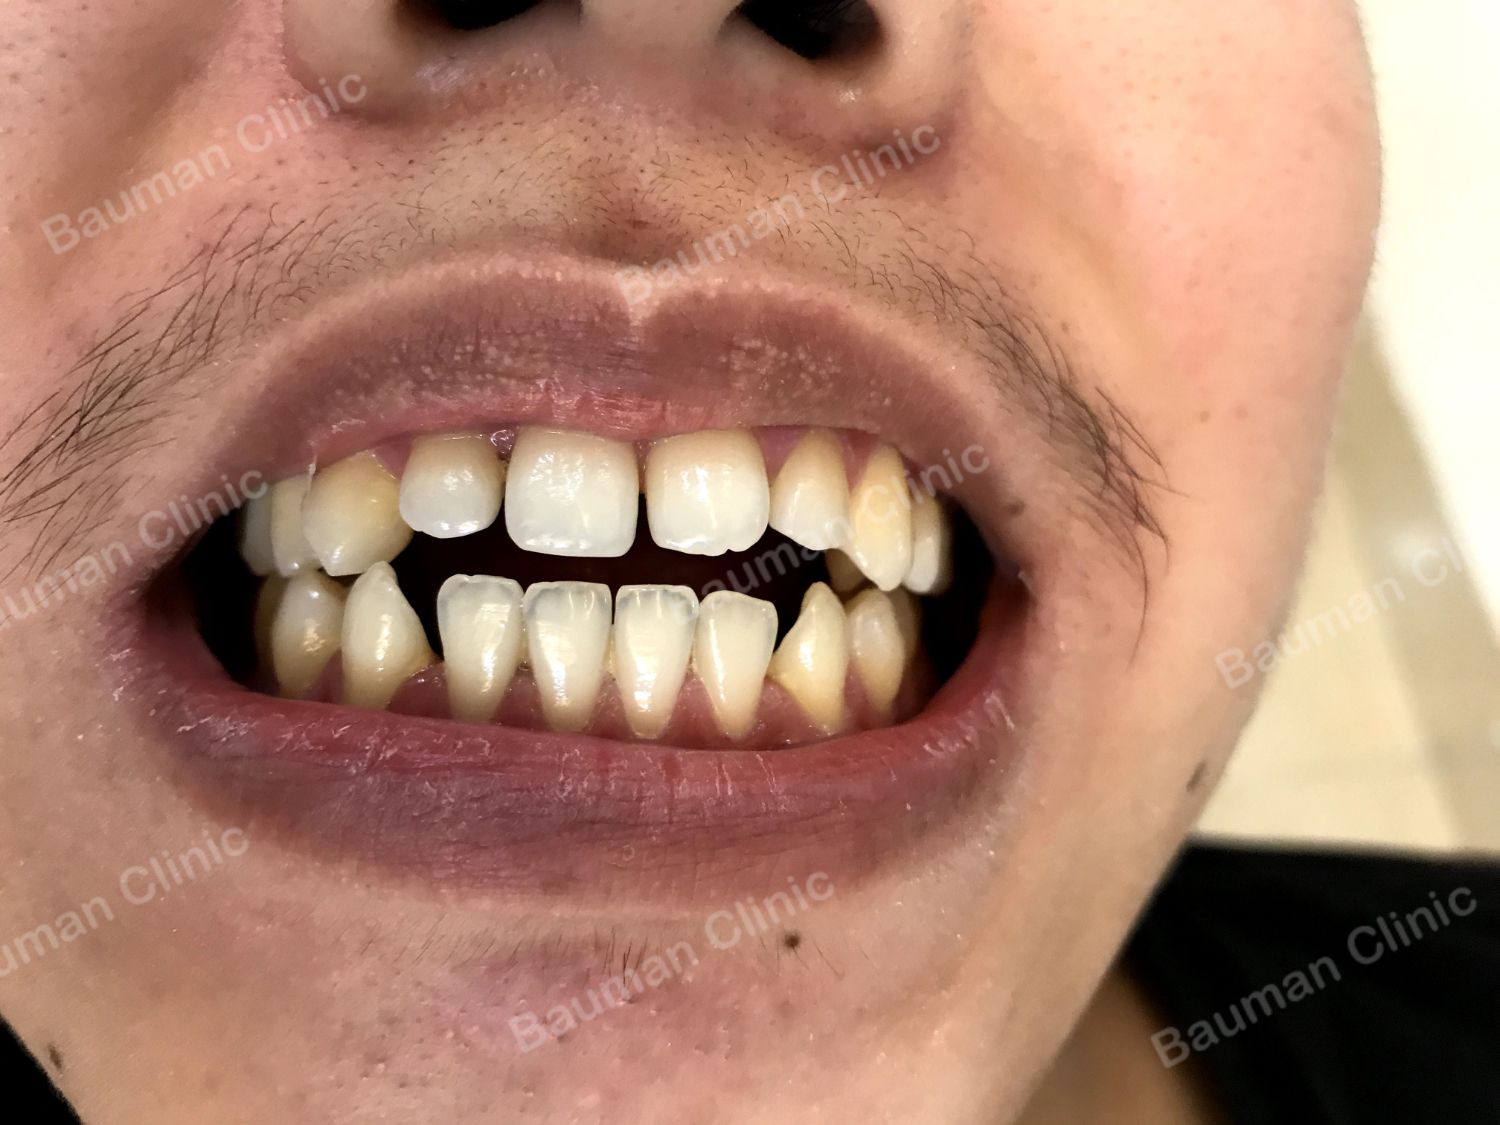 Ca niềng răng số 5008 - Nha khoa Bauman Clinic